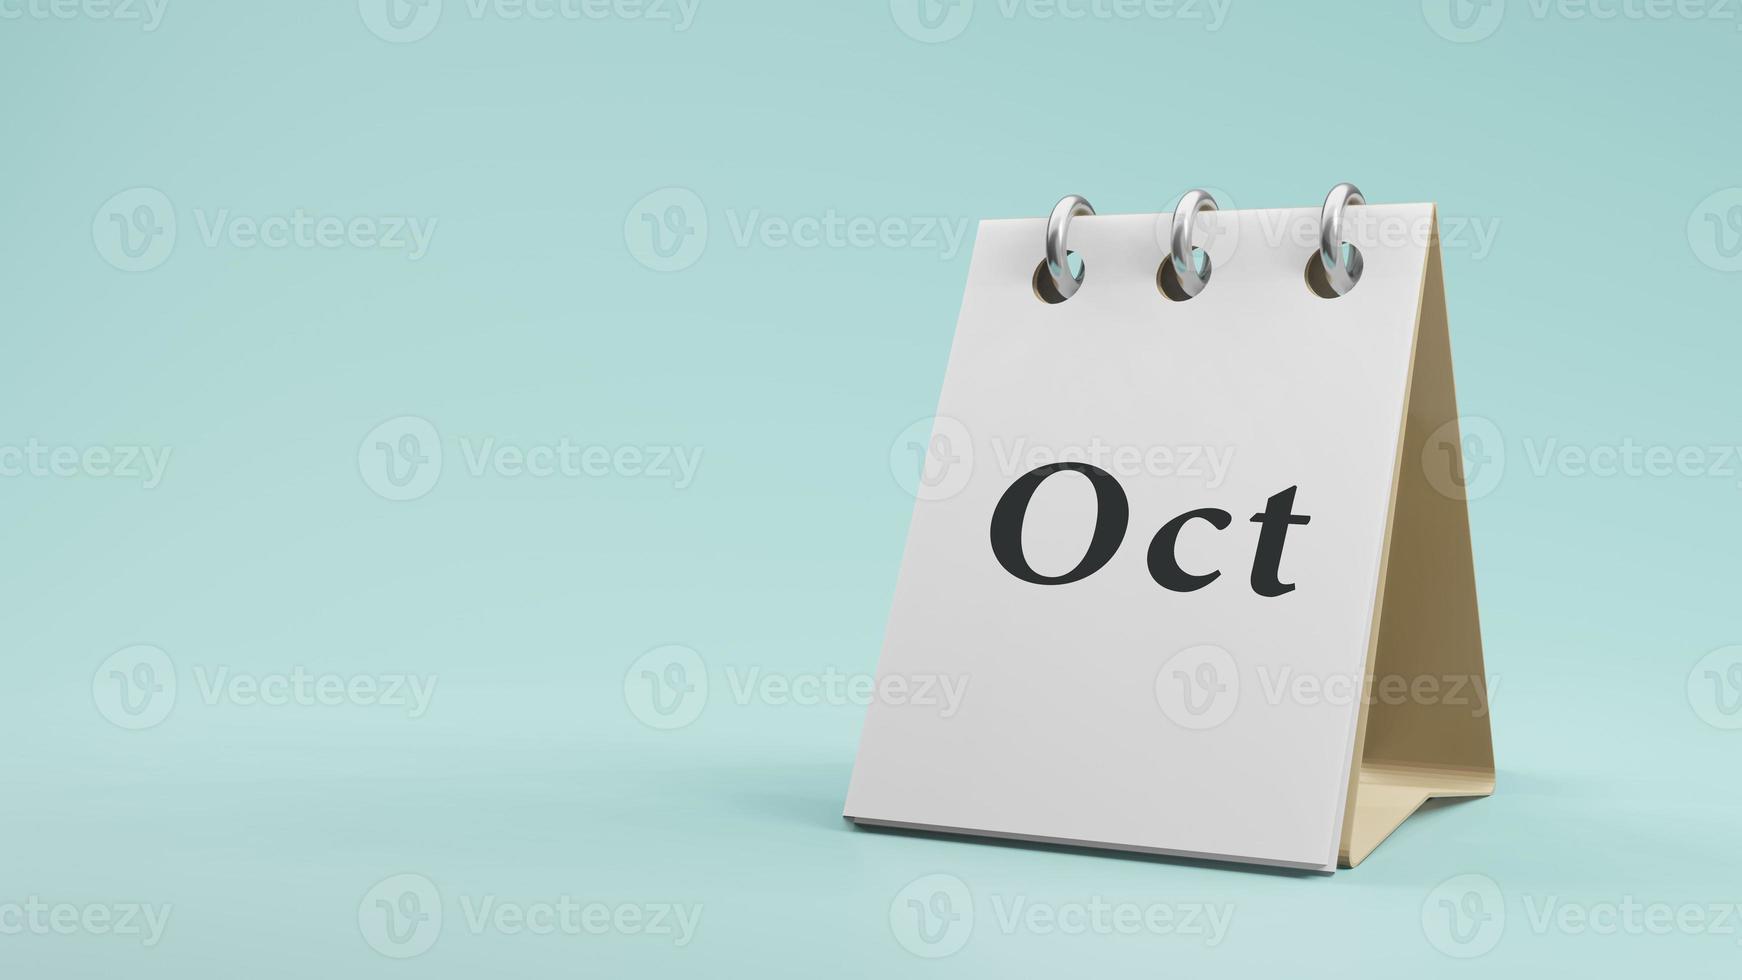 Oct on  paper desk  calendar  3d rendering photo